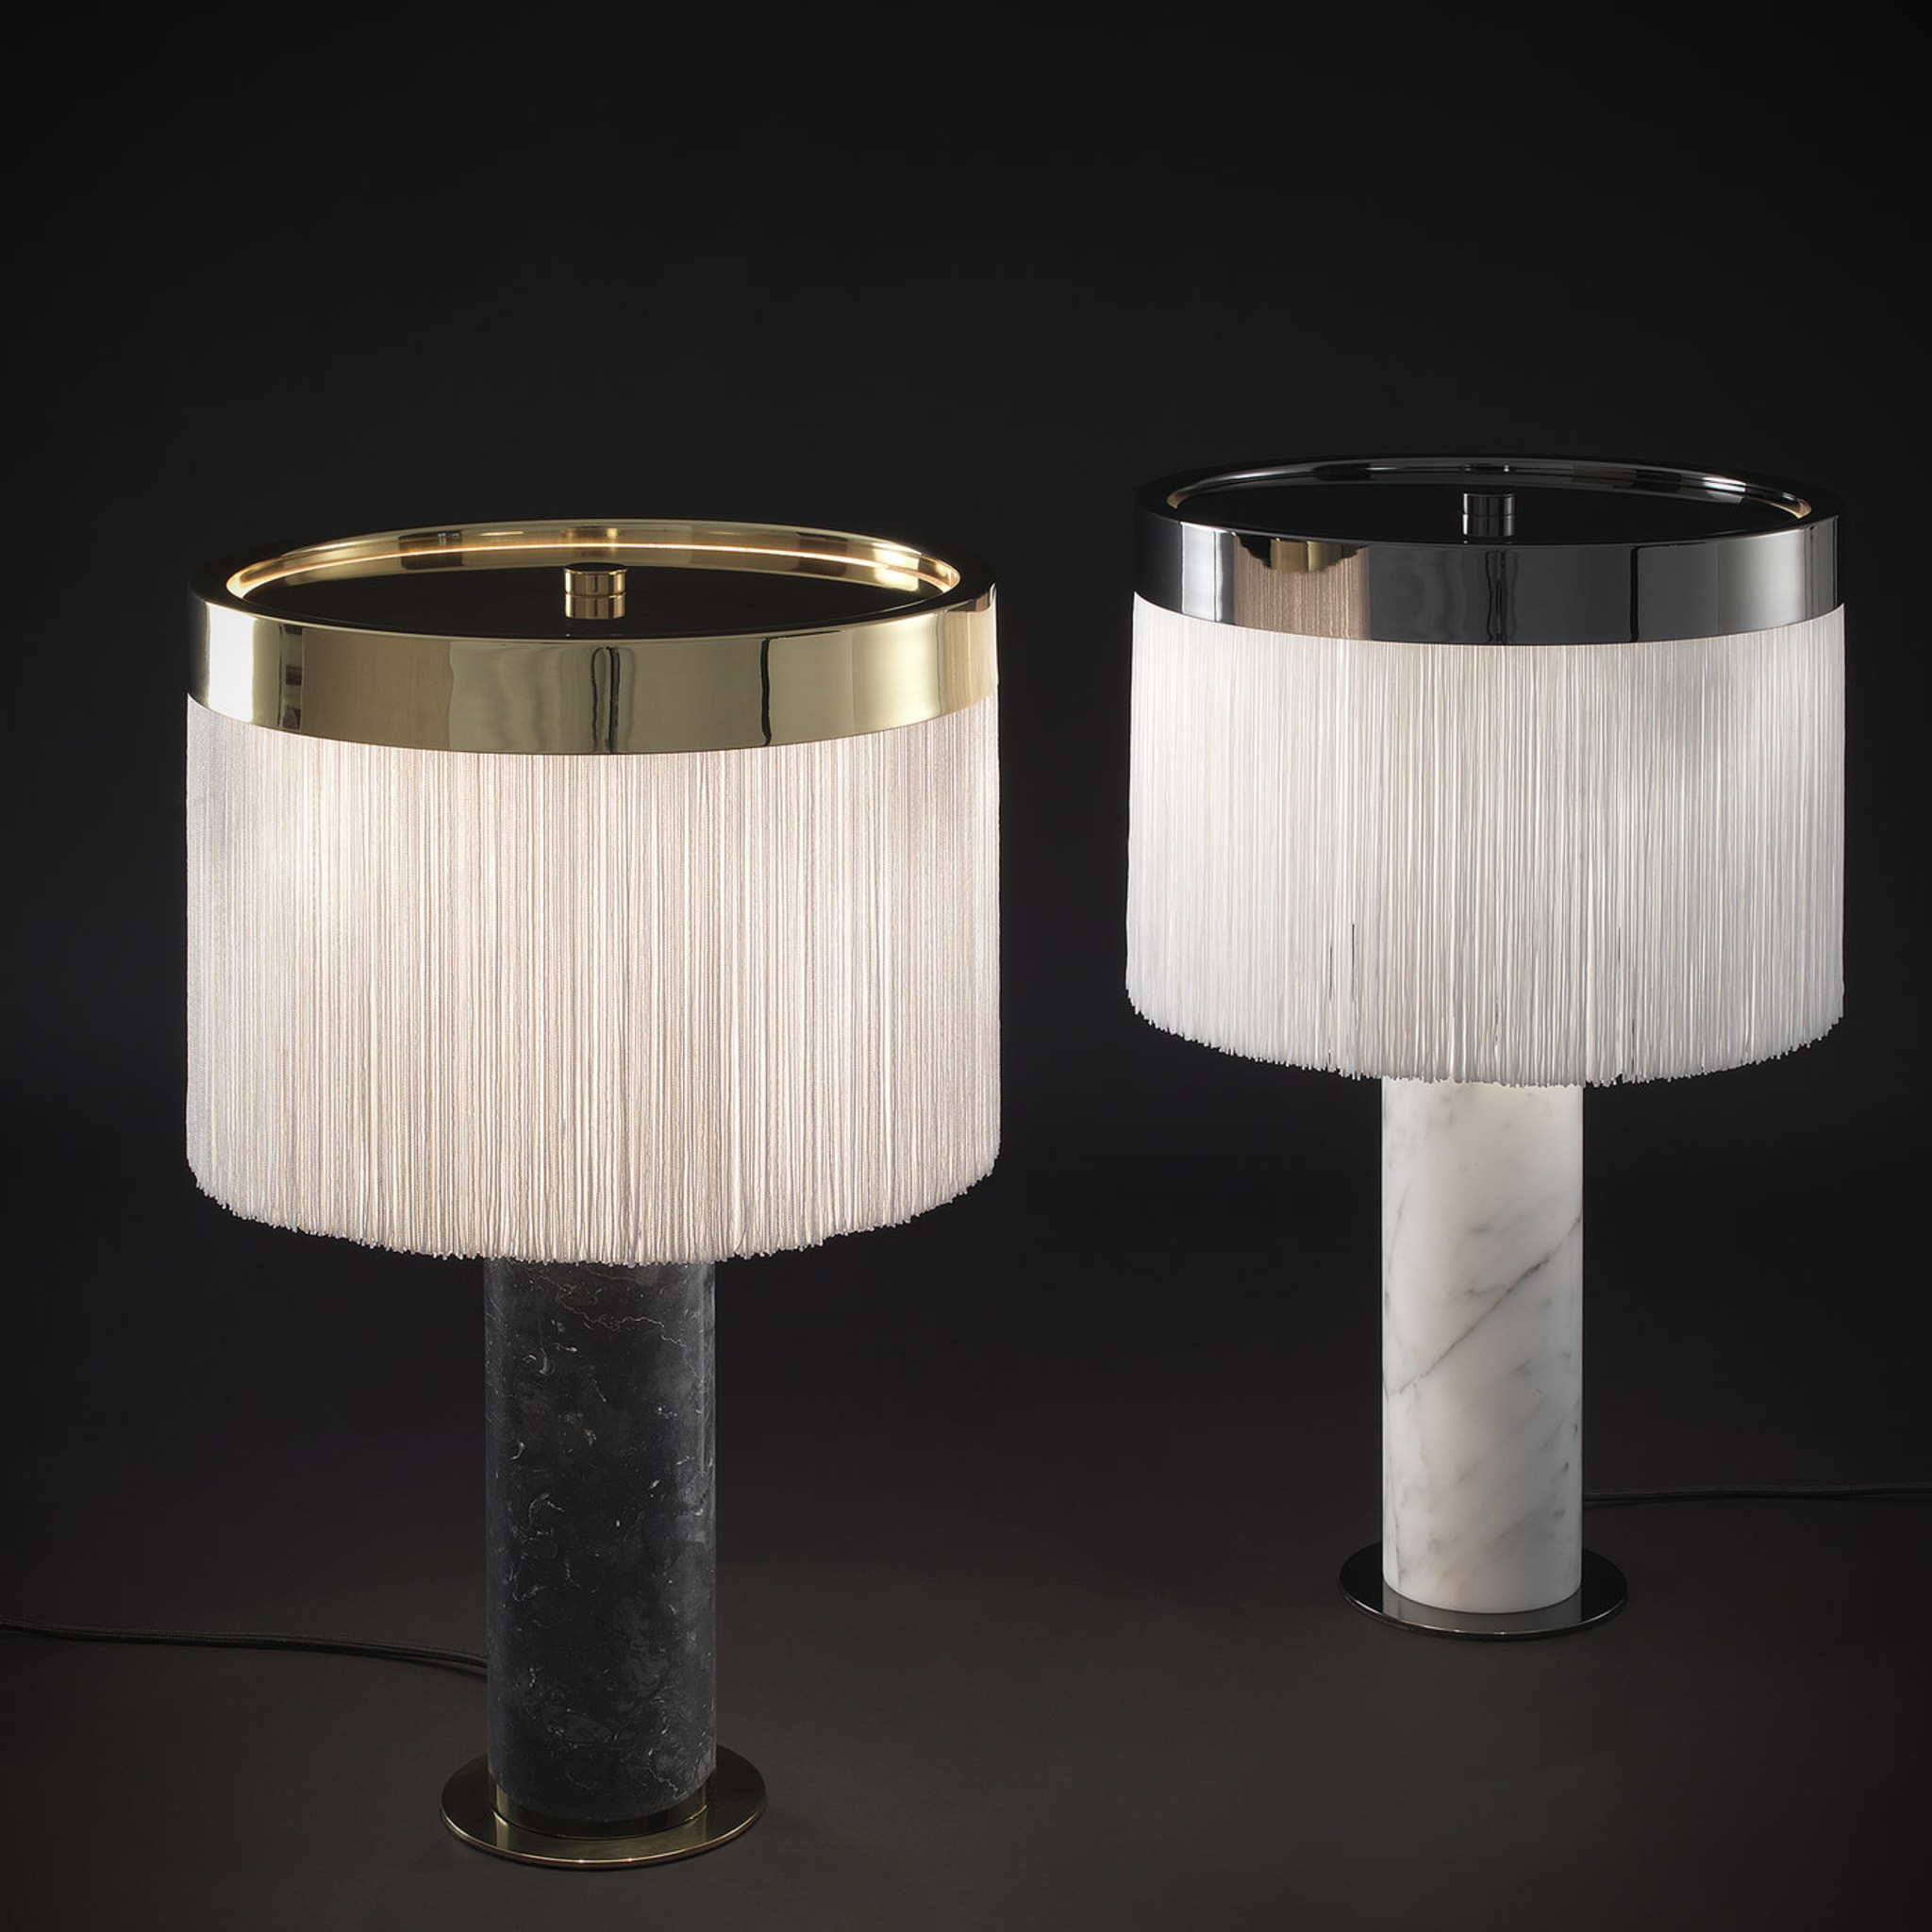 Orsola Black Table Lamp by Bozzoli - Alternative view 1